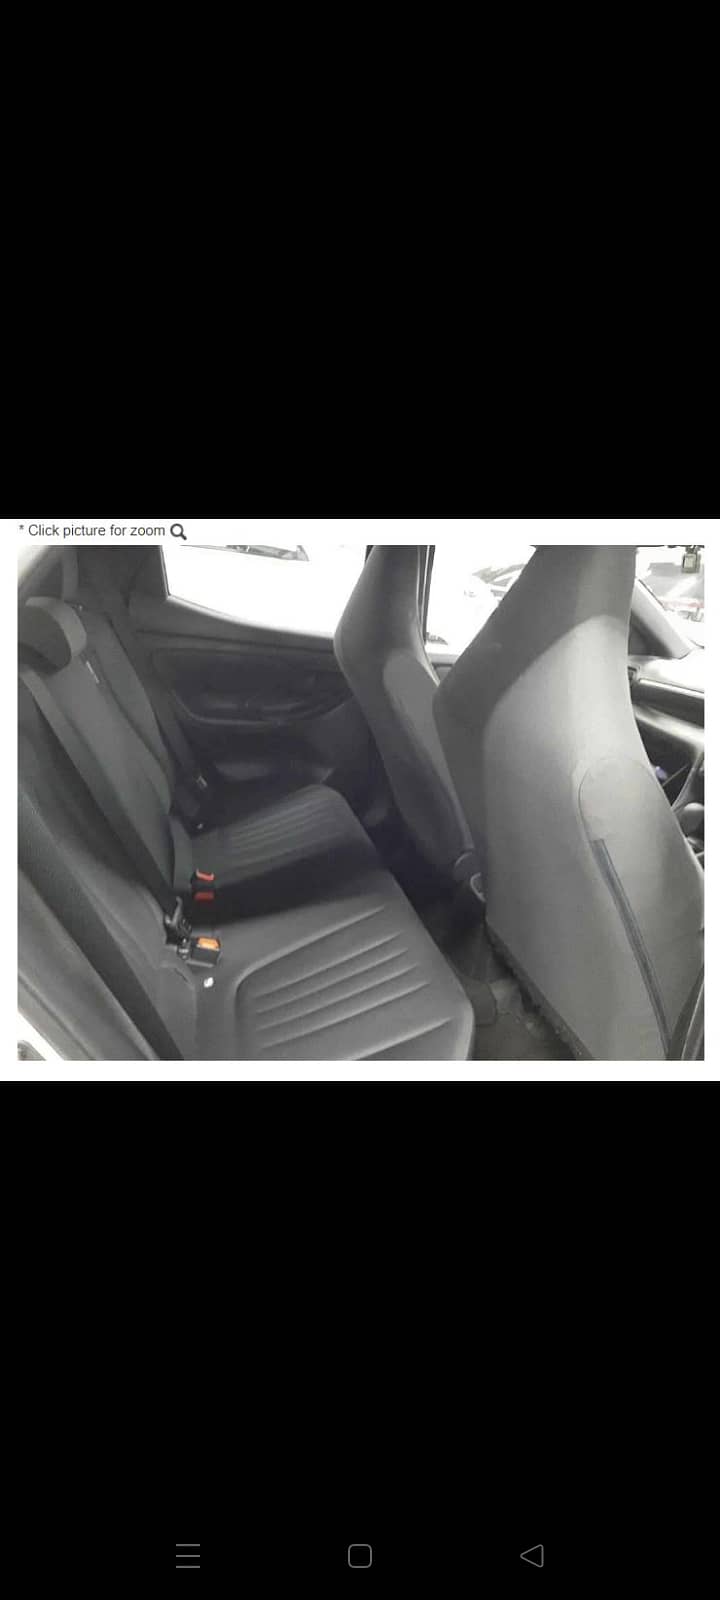 Toyota Yaris hashback full option X package 4.5 5